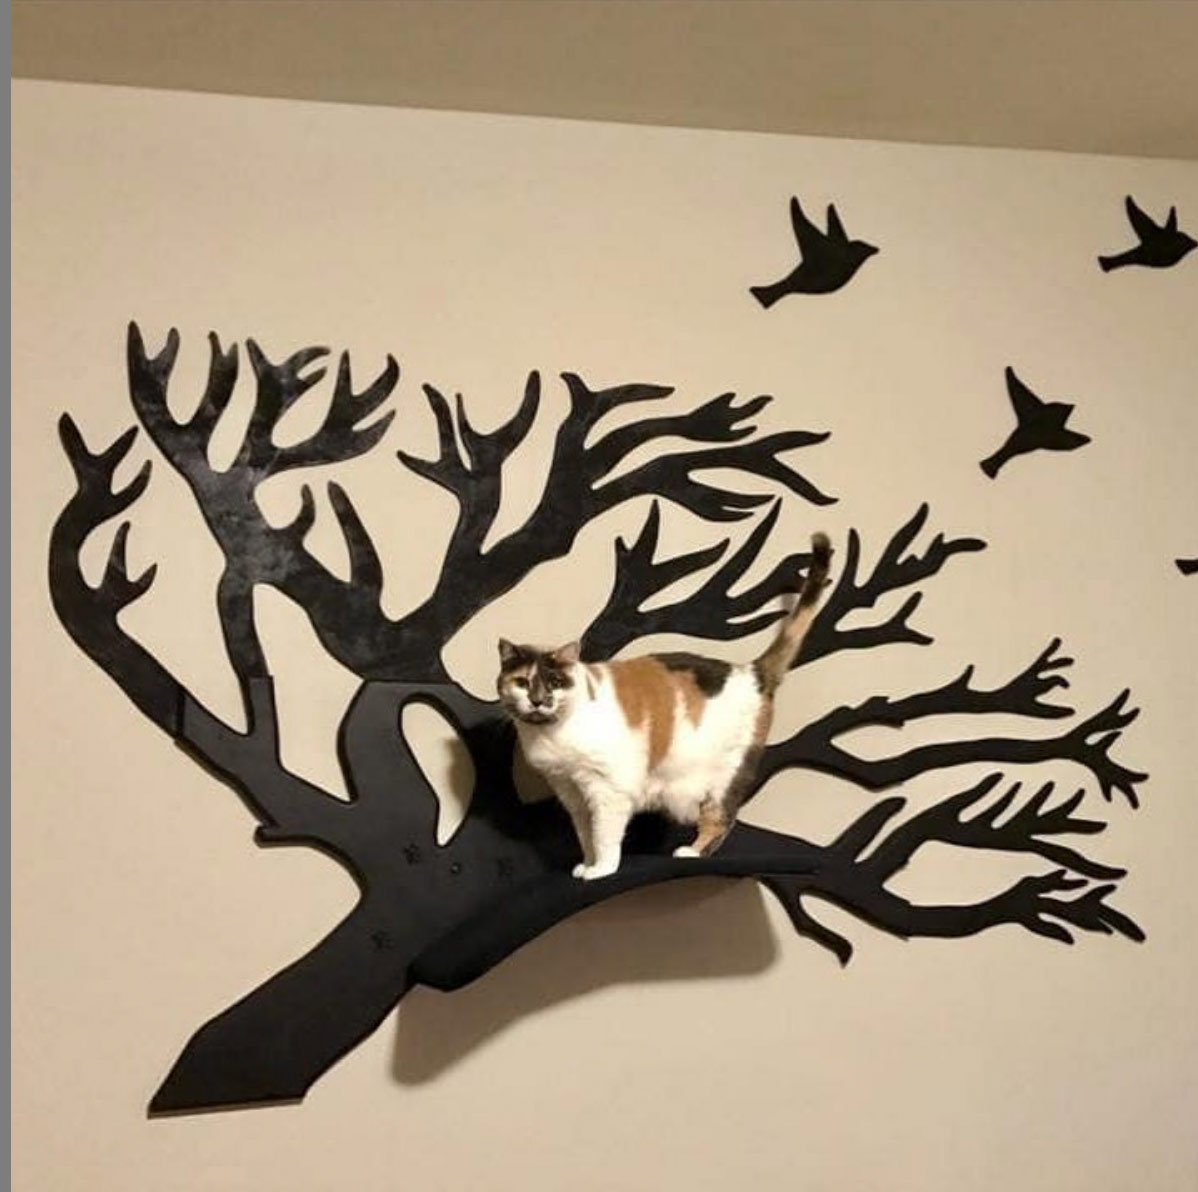 CatsPlay Cat Furniture Instagram